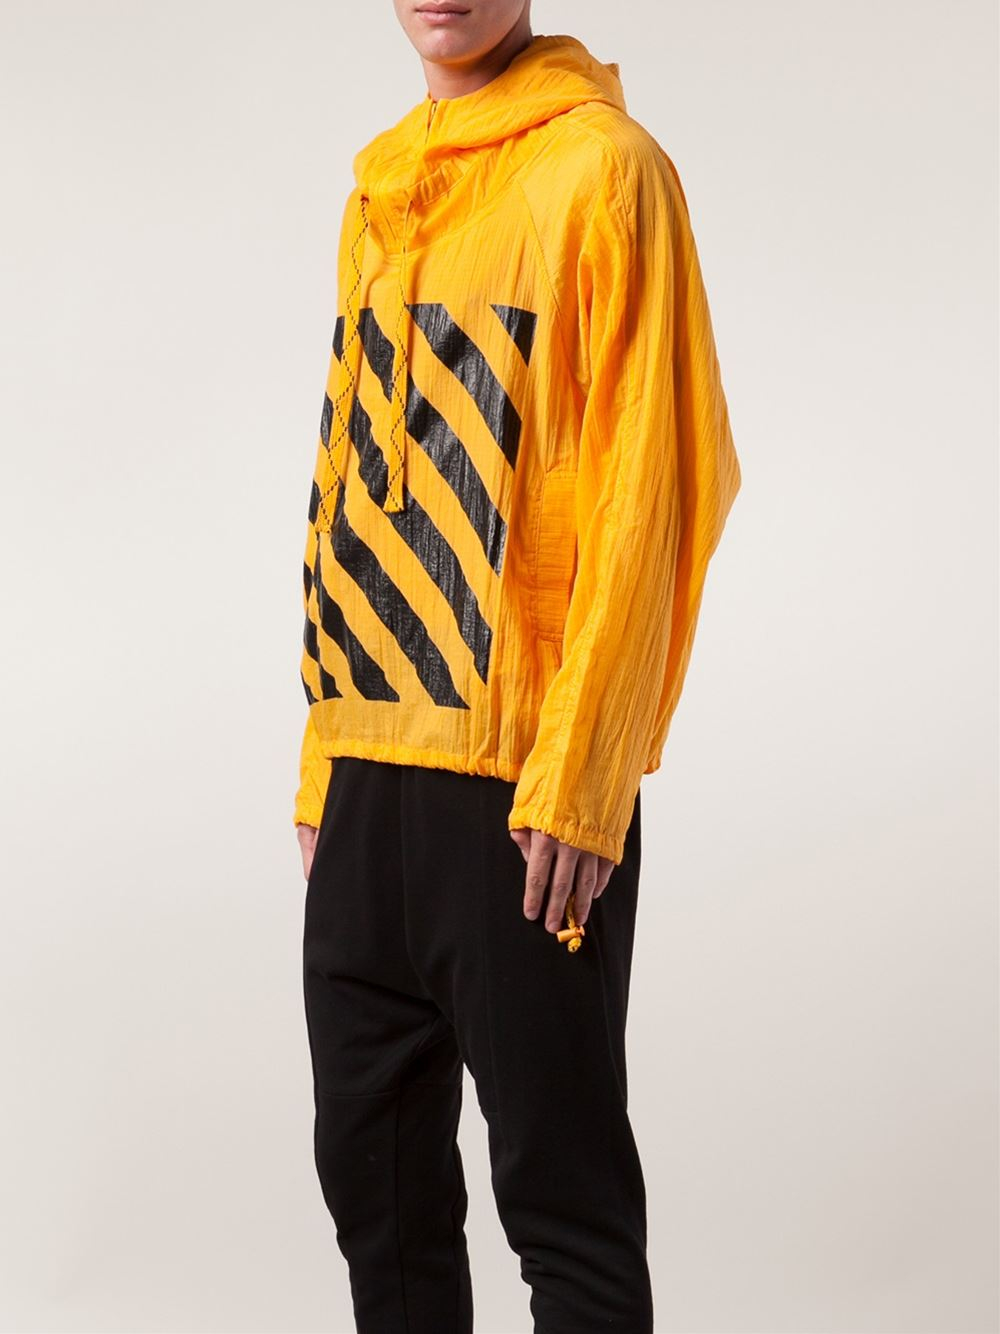 Off-White c/o Virgil Abloh Windbreaker Jacket in Yellow & Orange ...